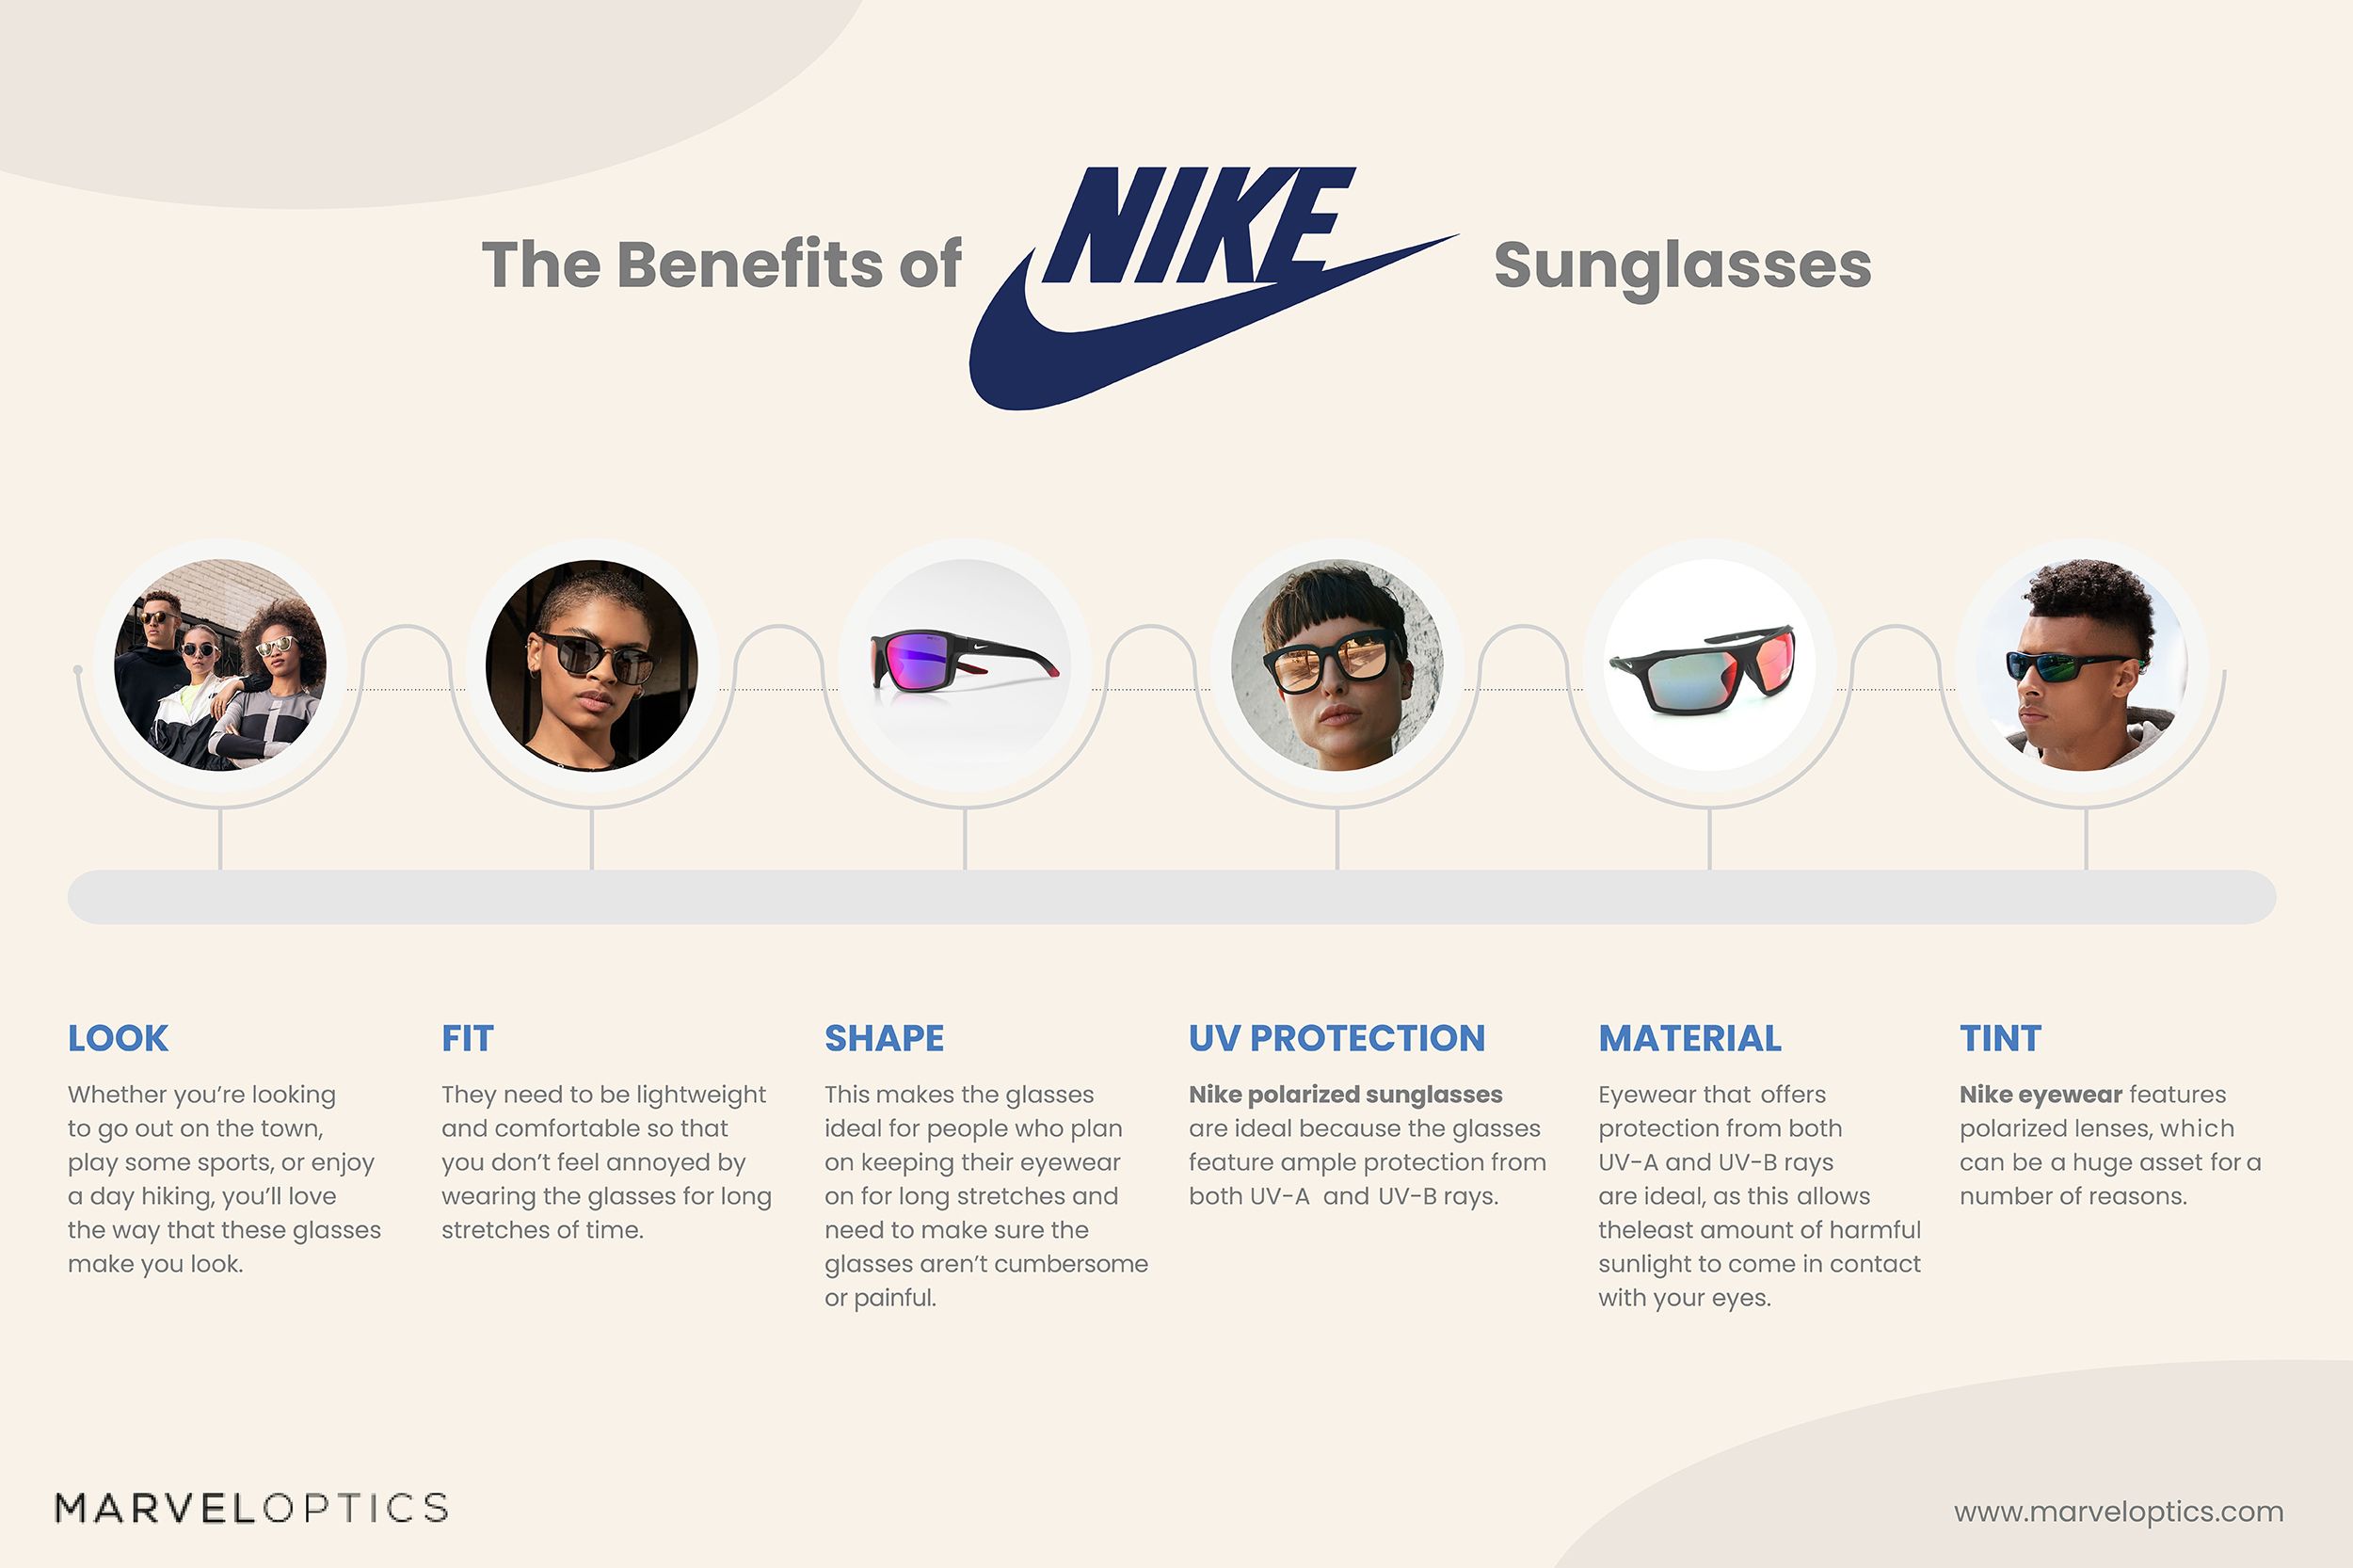 Benefits of Nike Sunglasses Infographic